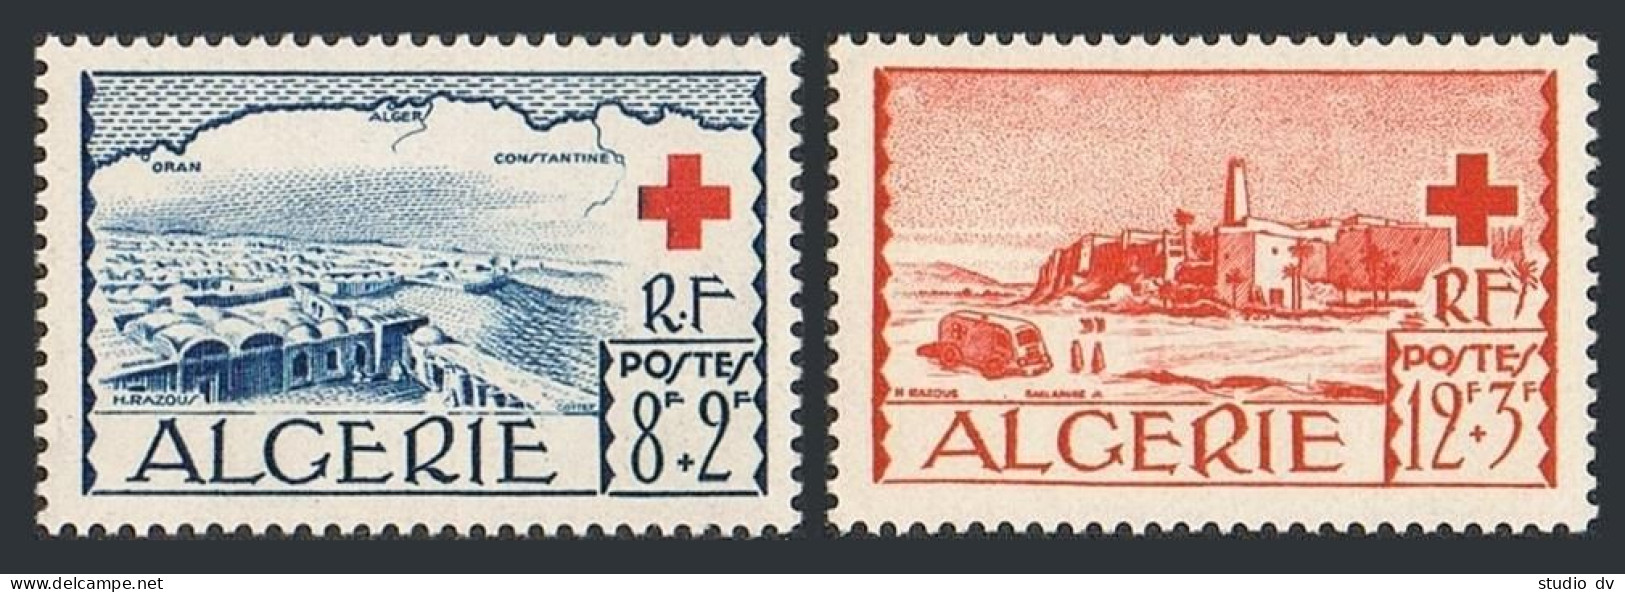 Algeria B67-B68, MNH. Mi 310-311. Red Cross 1952. View Of El Oued. Map, Truck. - Algérie (1962-...)